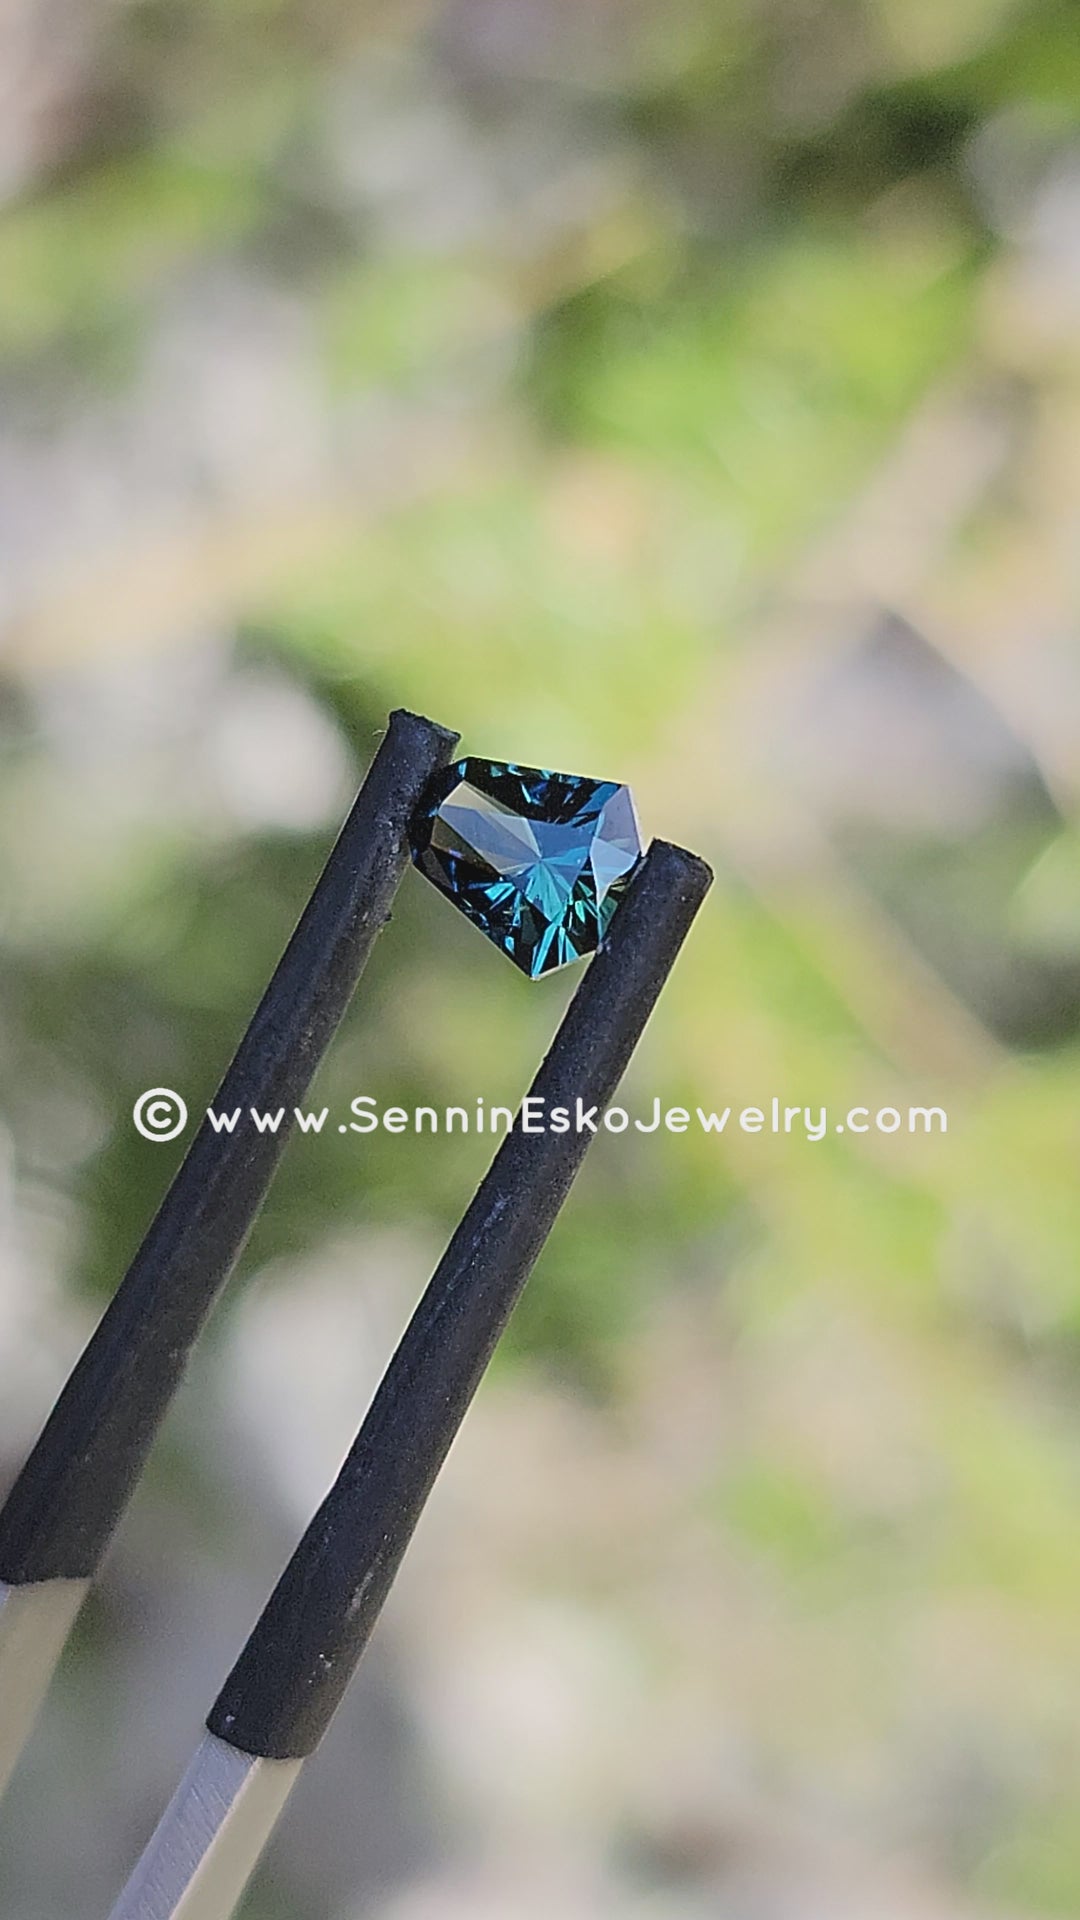 1.1 Carat Inky Green/Blue Kenyan Sapphire Octagon - 6.5x5.3mm, Fantasy Shape